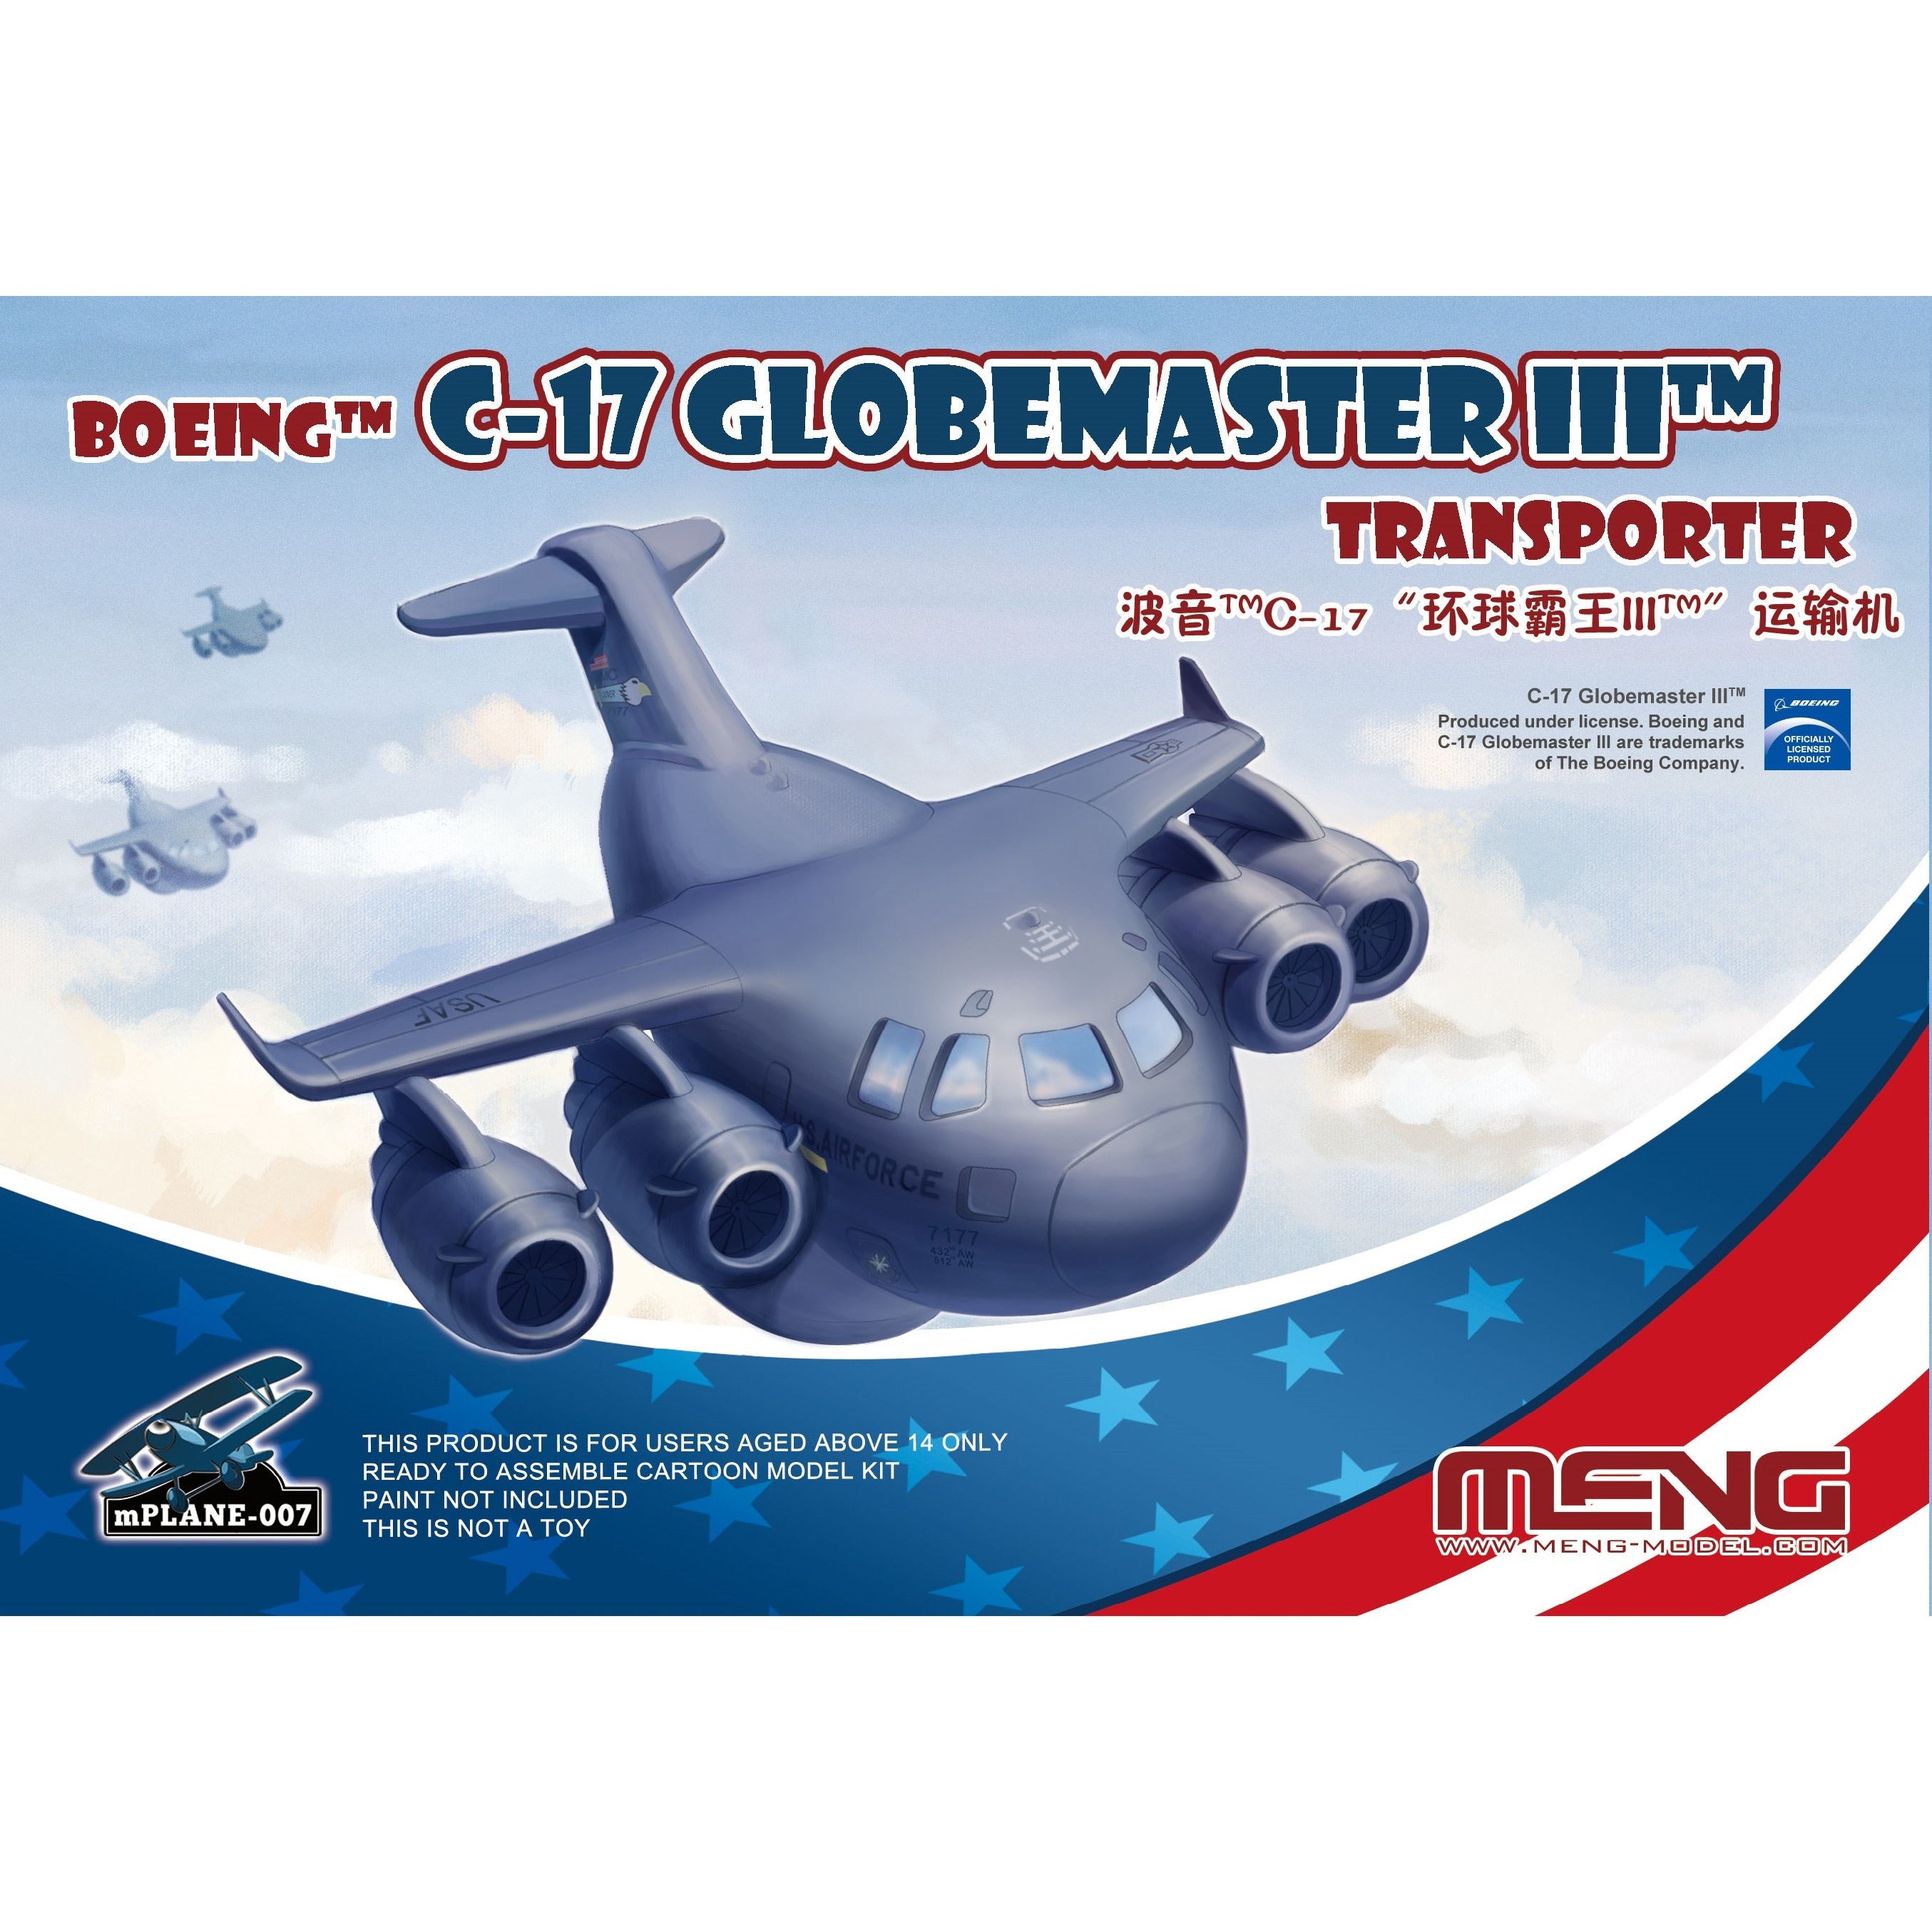 Boeing C-17 Globemaster III Transporter by Meng